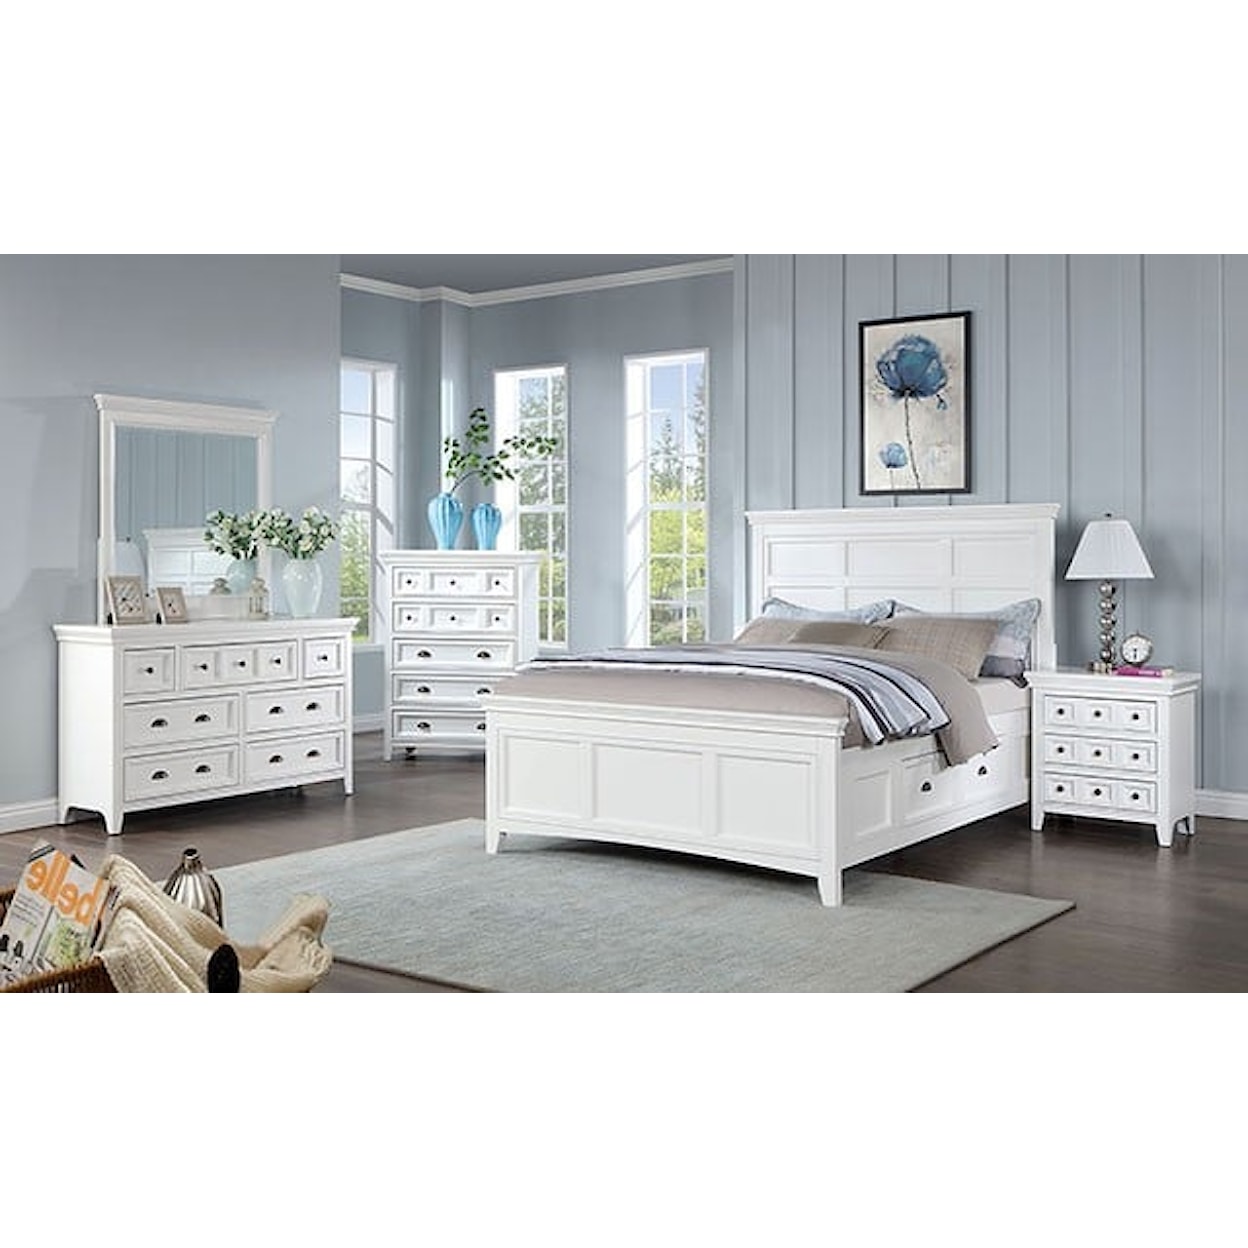 Furniture of America CASTILE 4-Piece Twin Bedroom Set